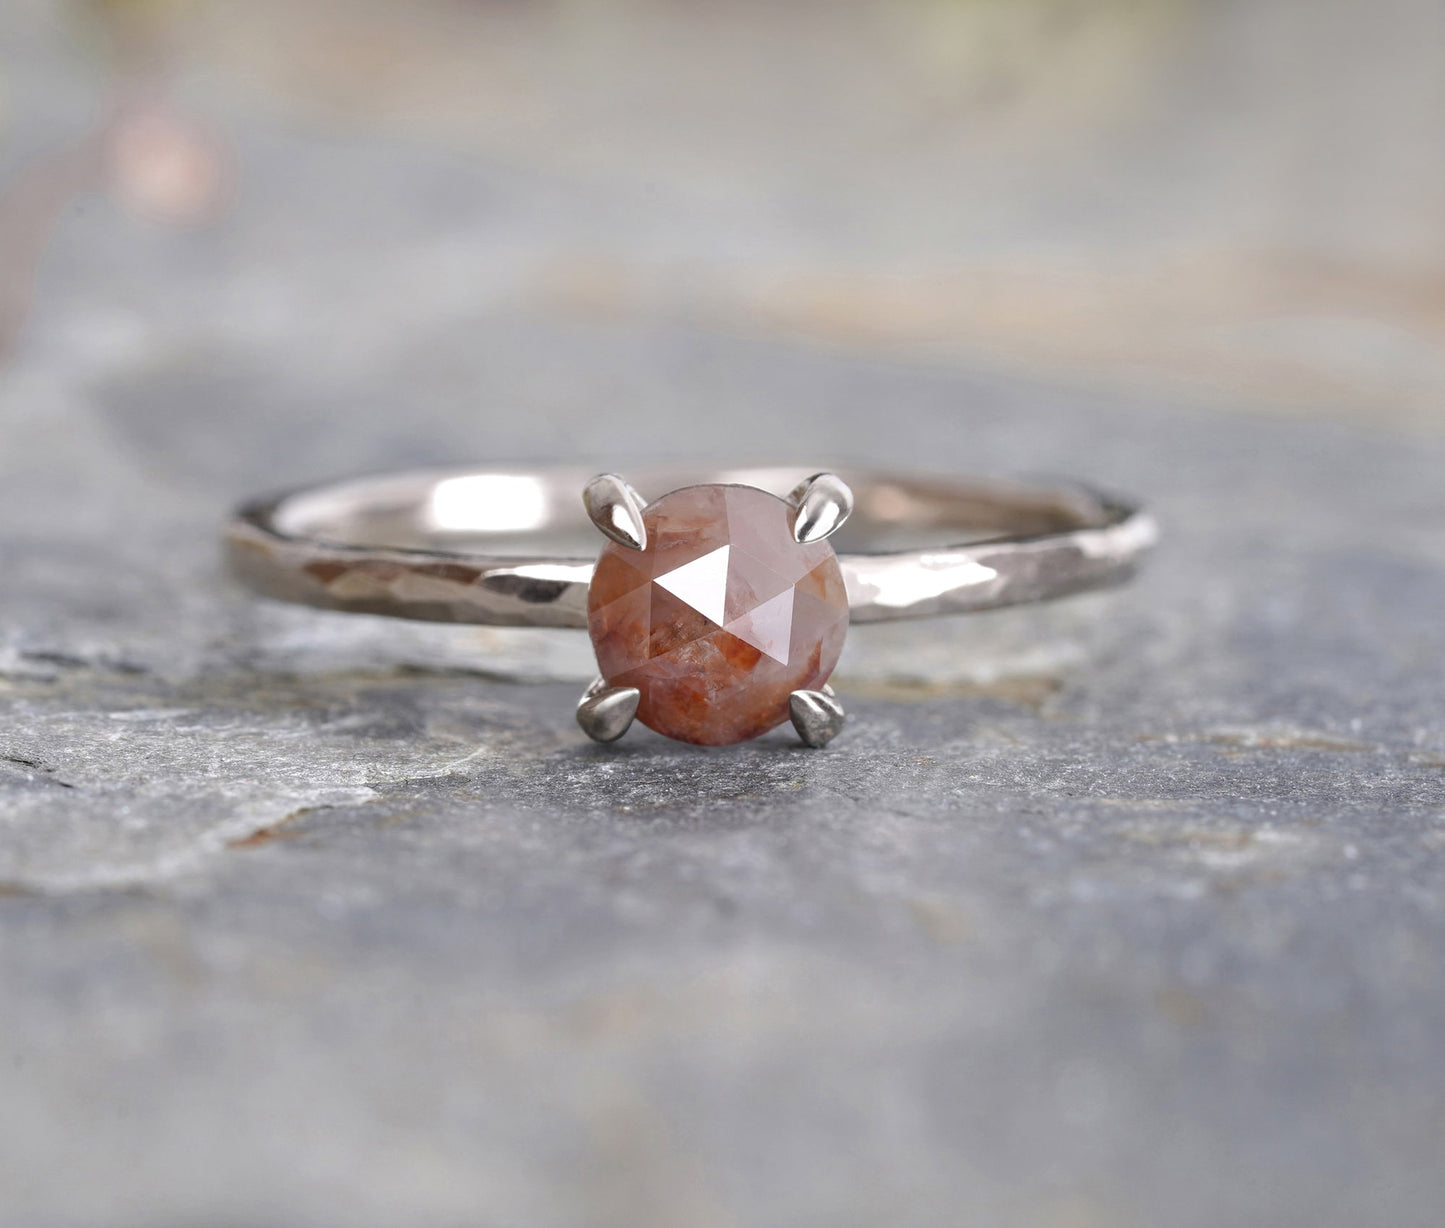 Rose Cut Diamond Engagement Ring in 18ct White Gold, 0.65ct Diamond Ring, Rustic Diamond Ring